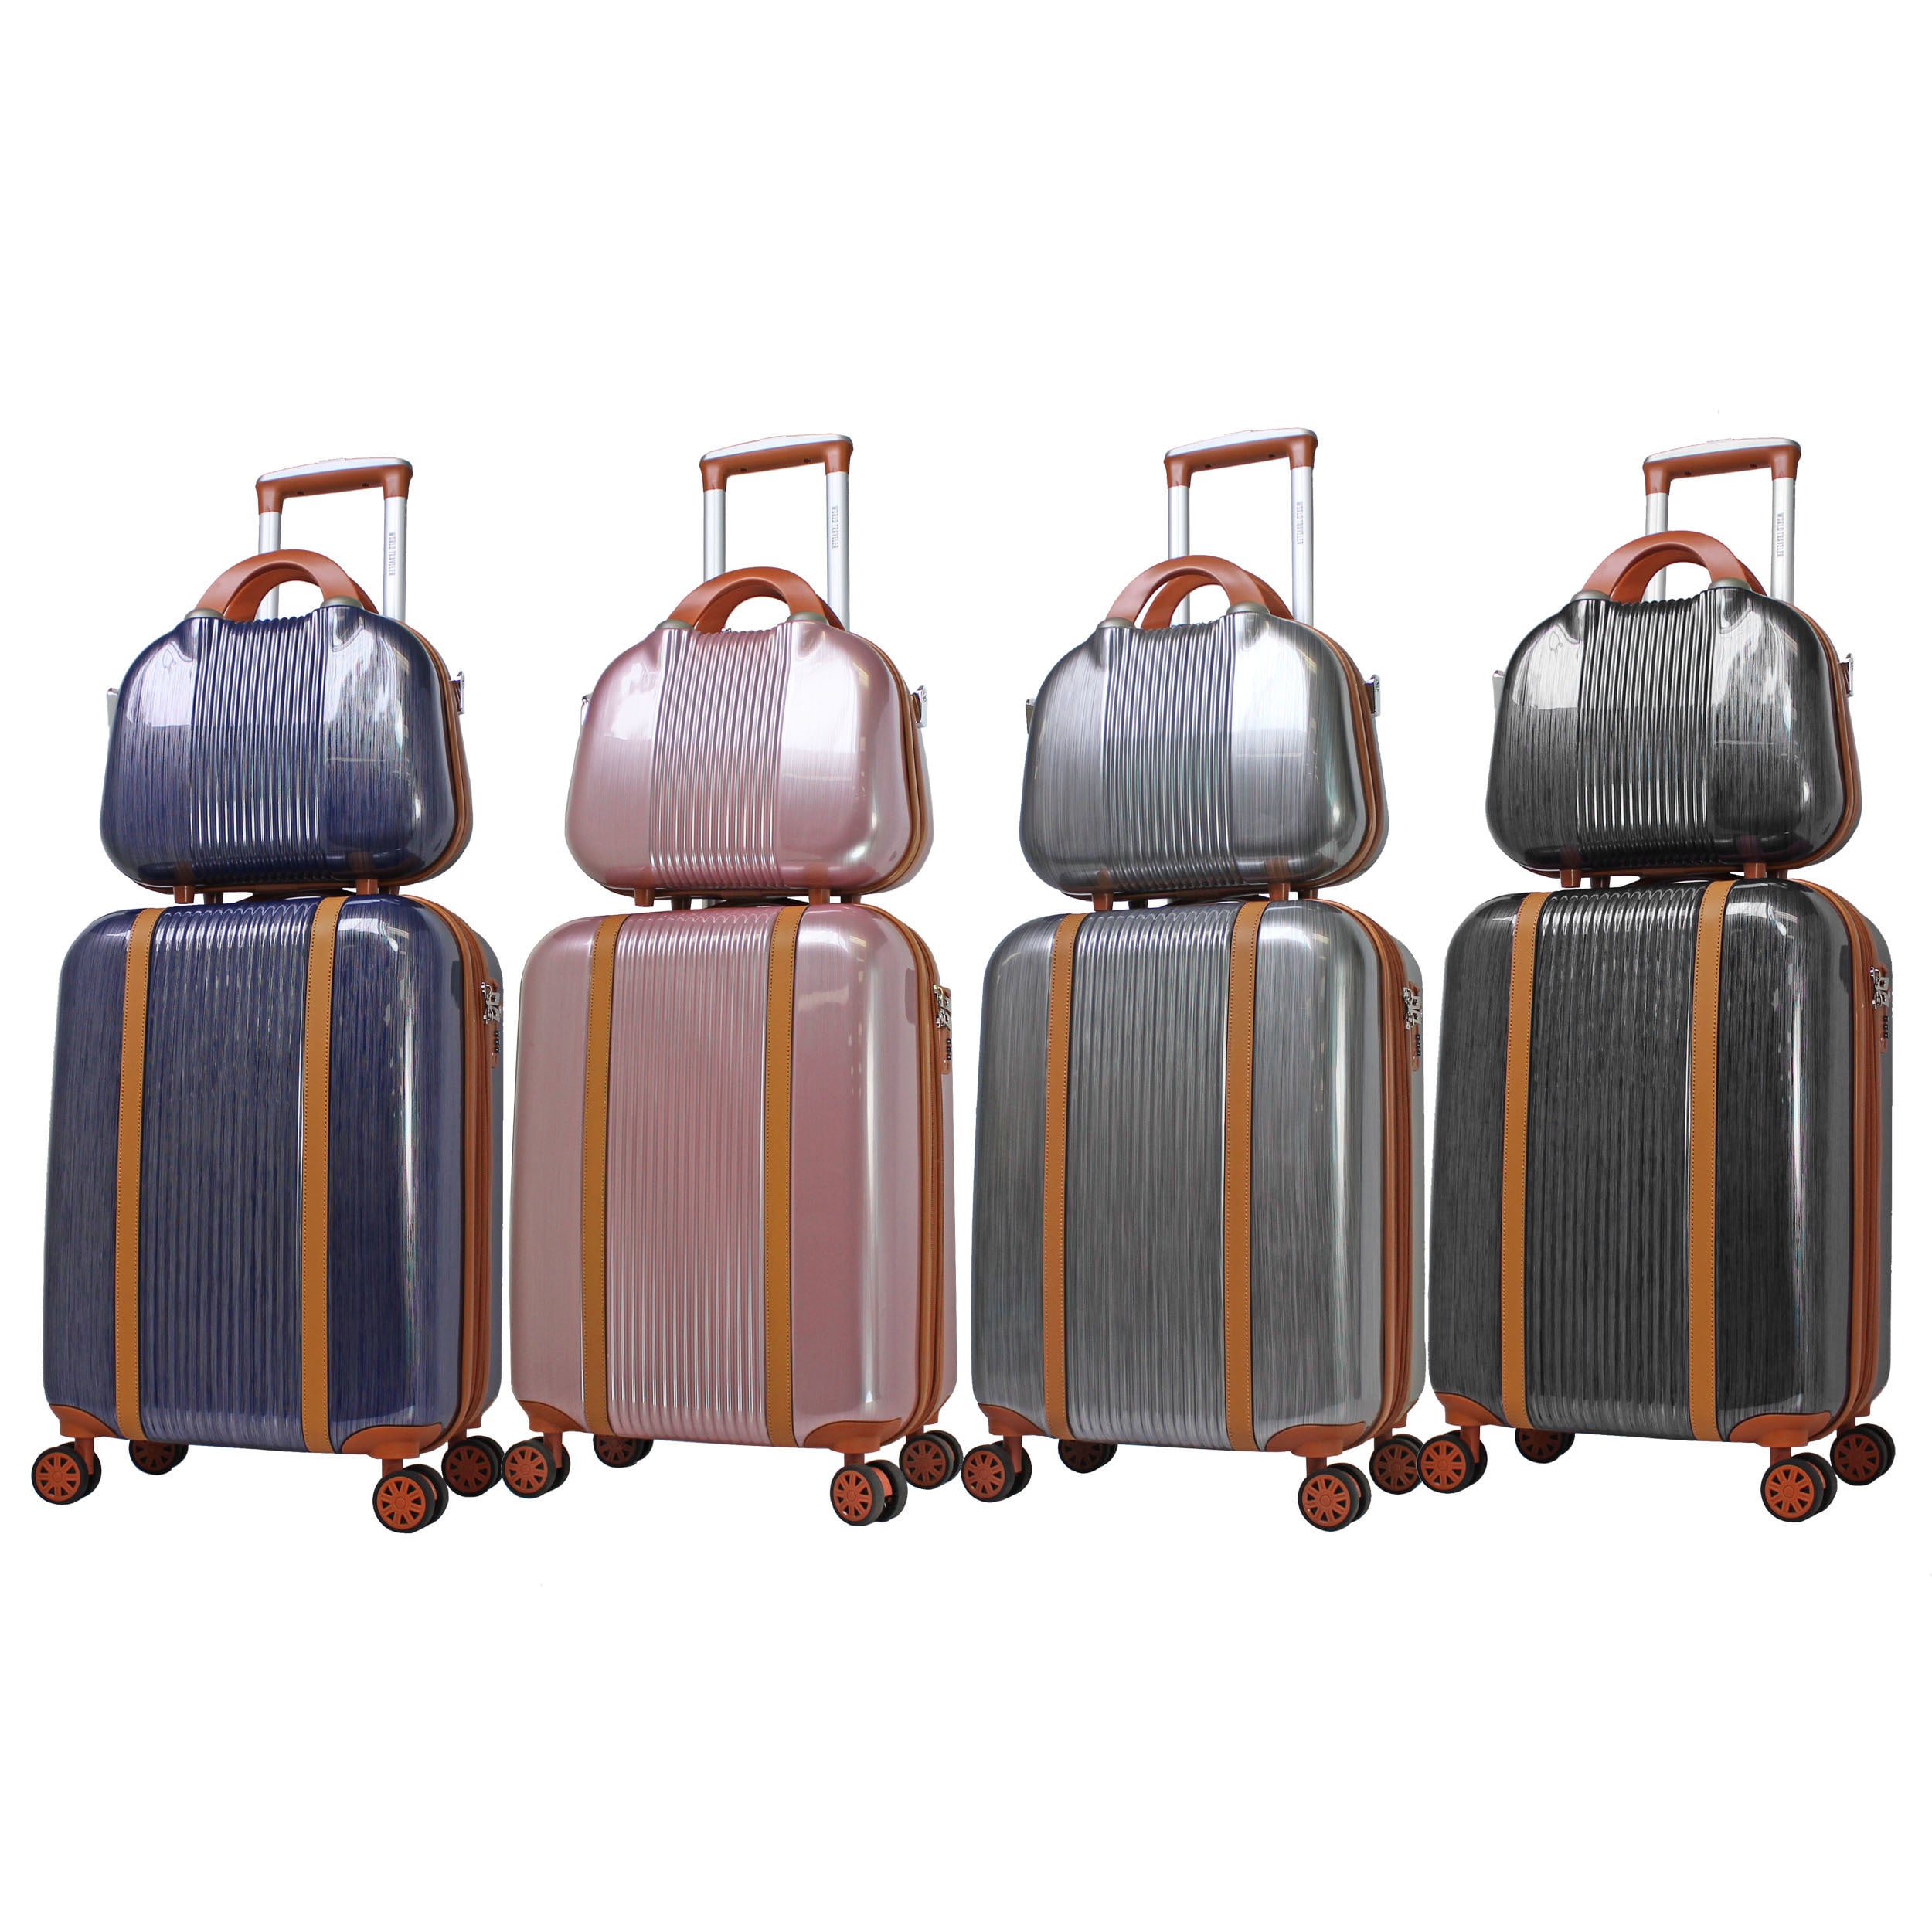 2 Piece Classique Hardside Carry On Spinner Luggage Set B4ed08fe 2165 4e24 Ae7e 0440f63be8f6 